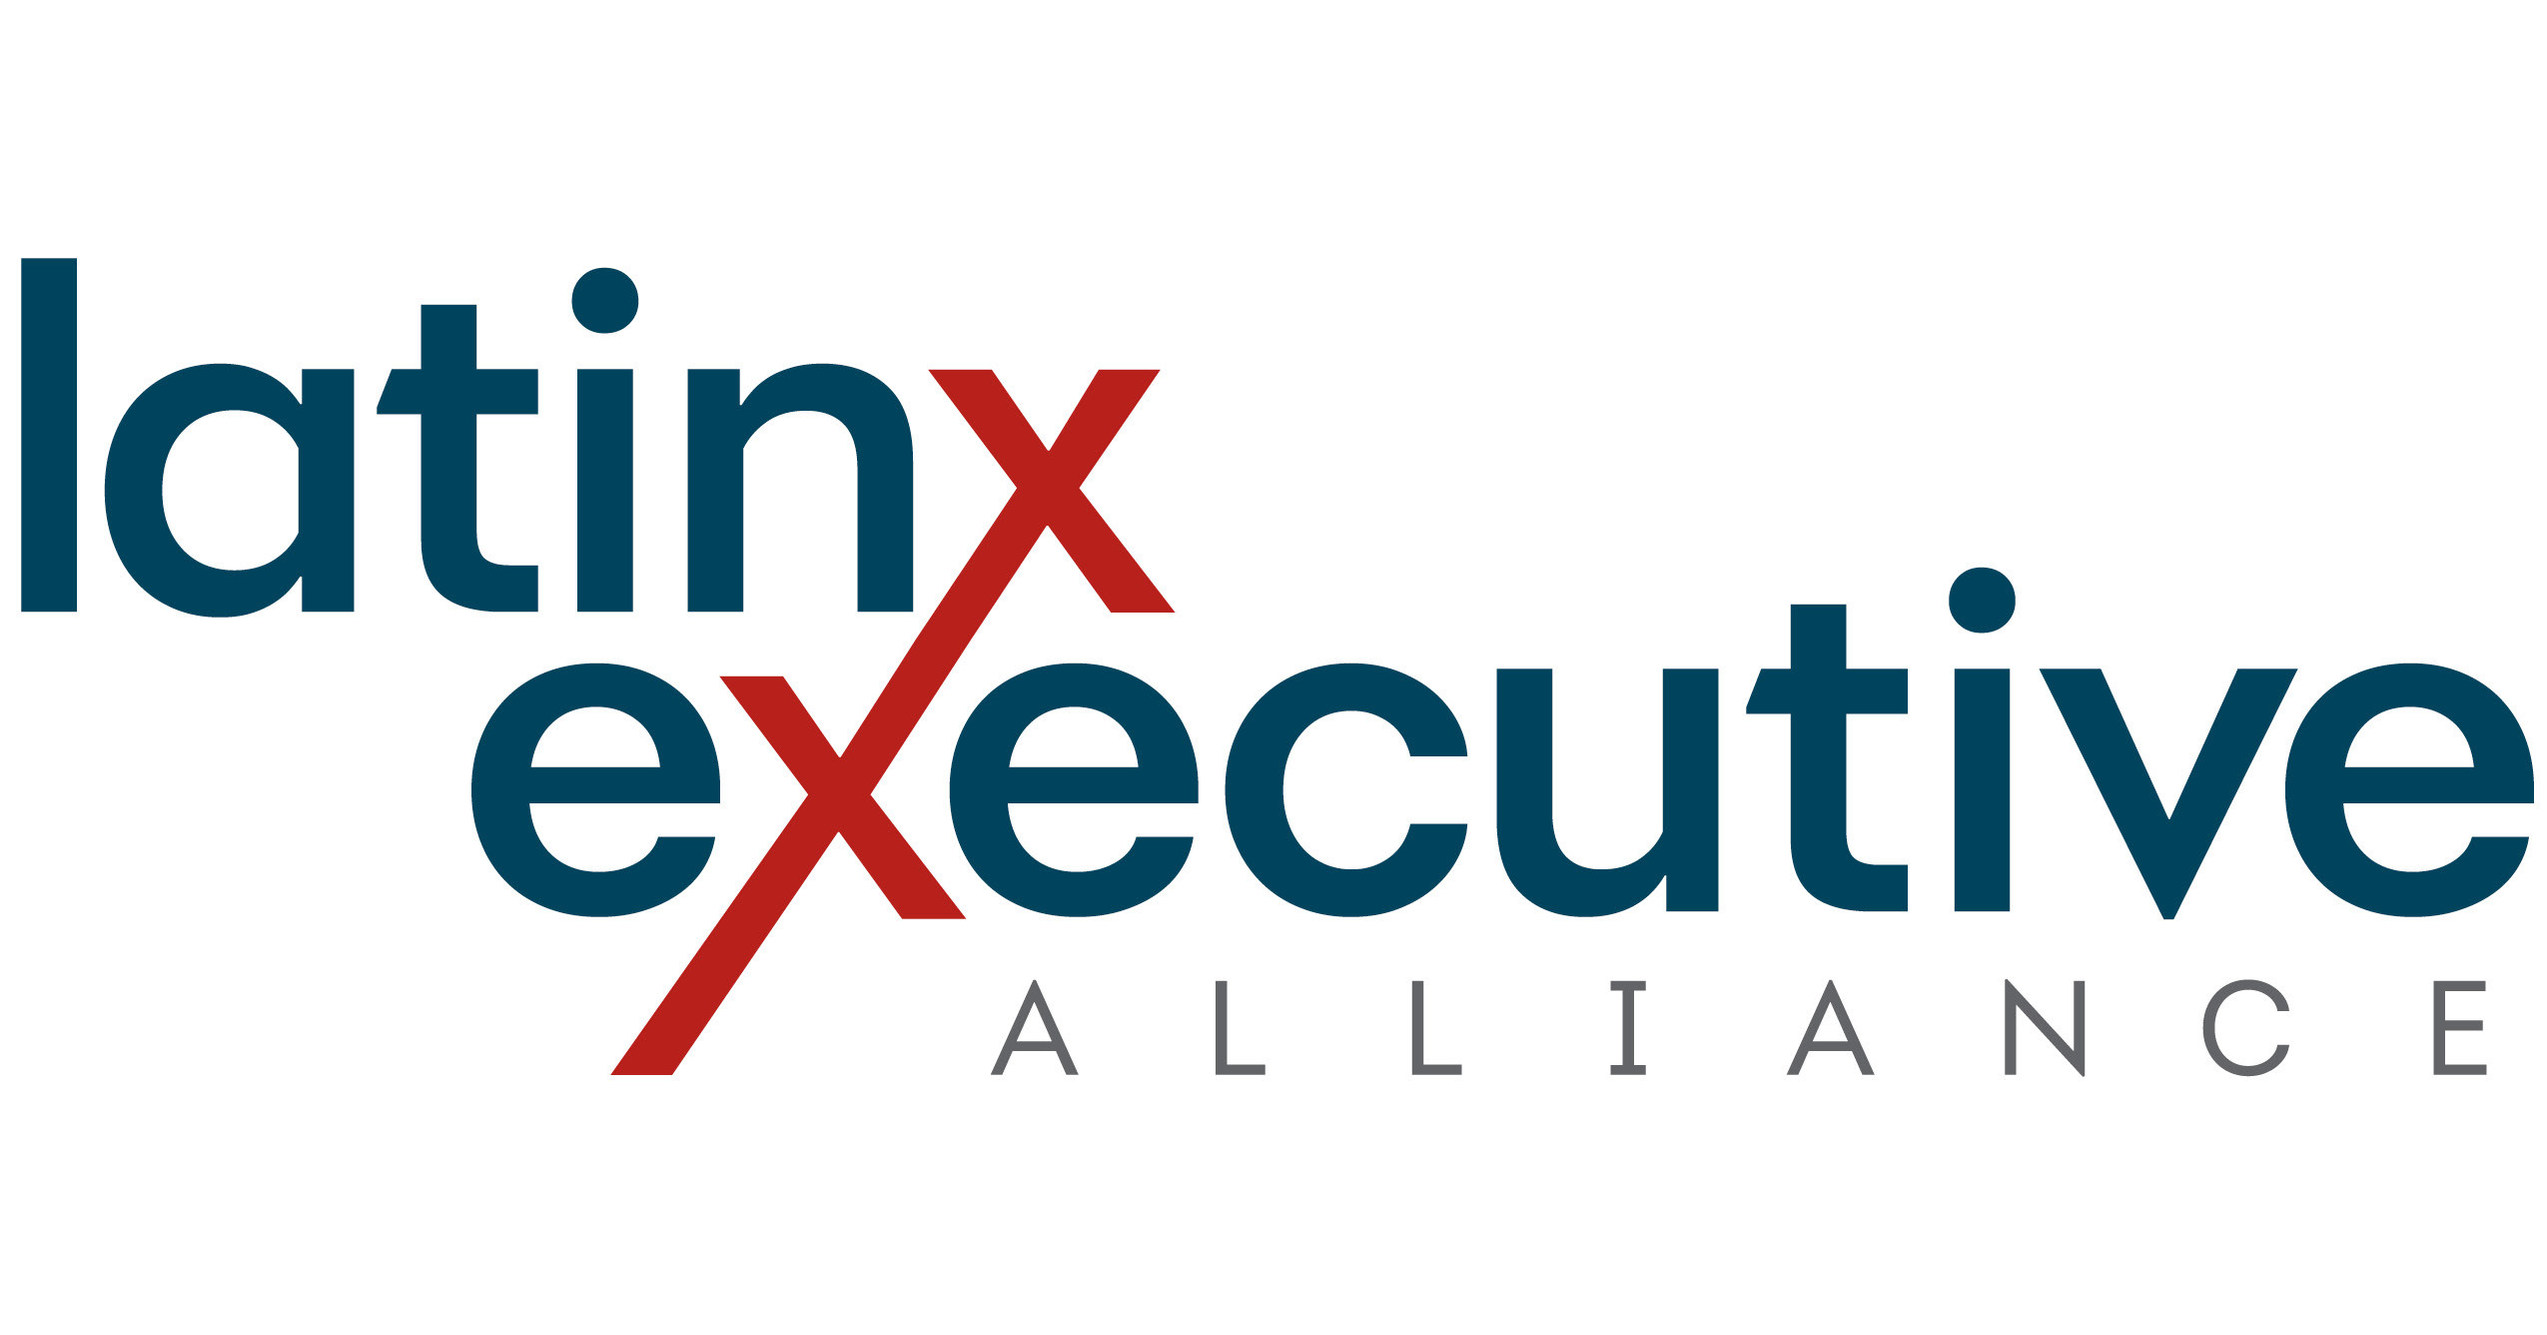 Latinx Executive Alliance Announces New Advisory Board